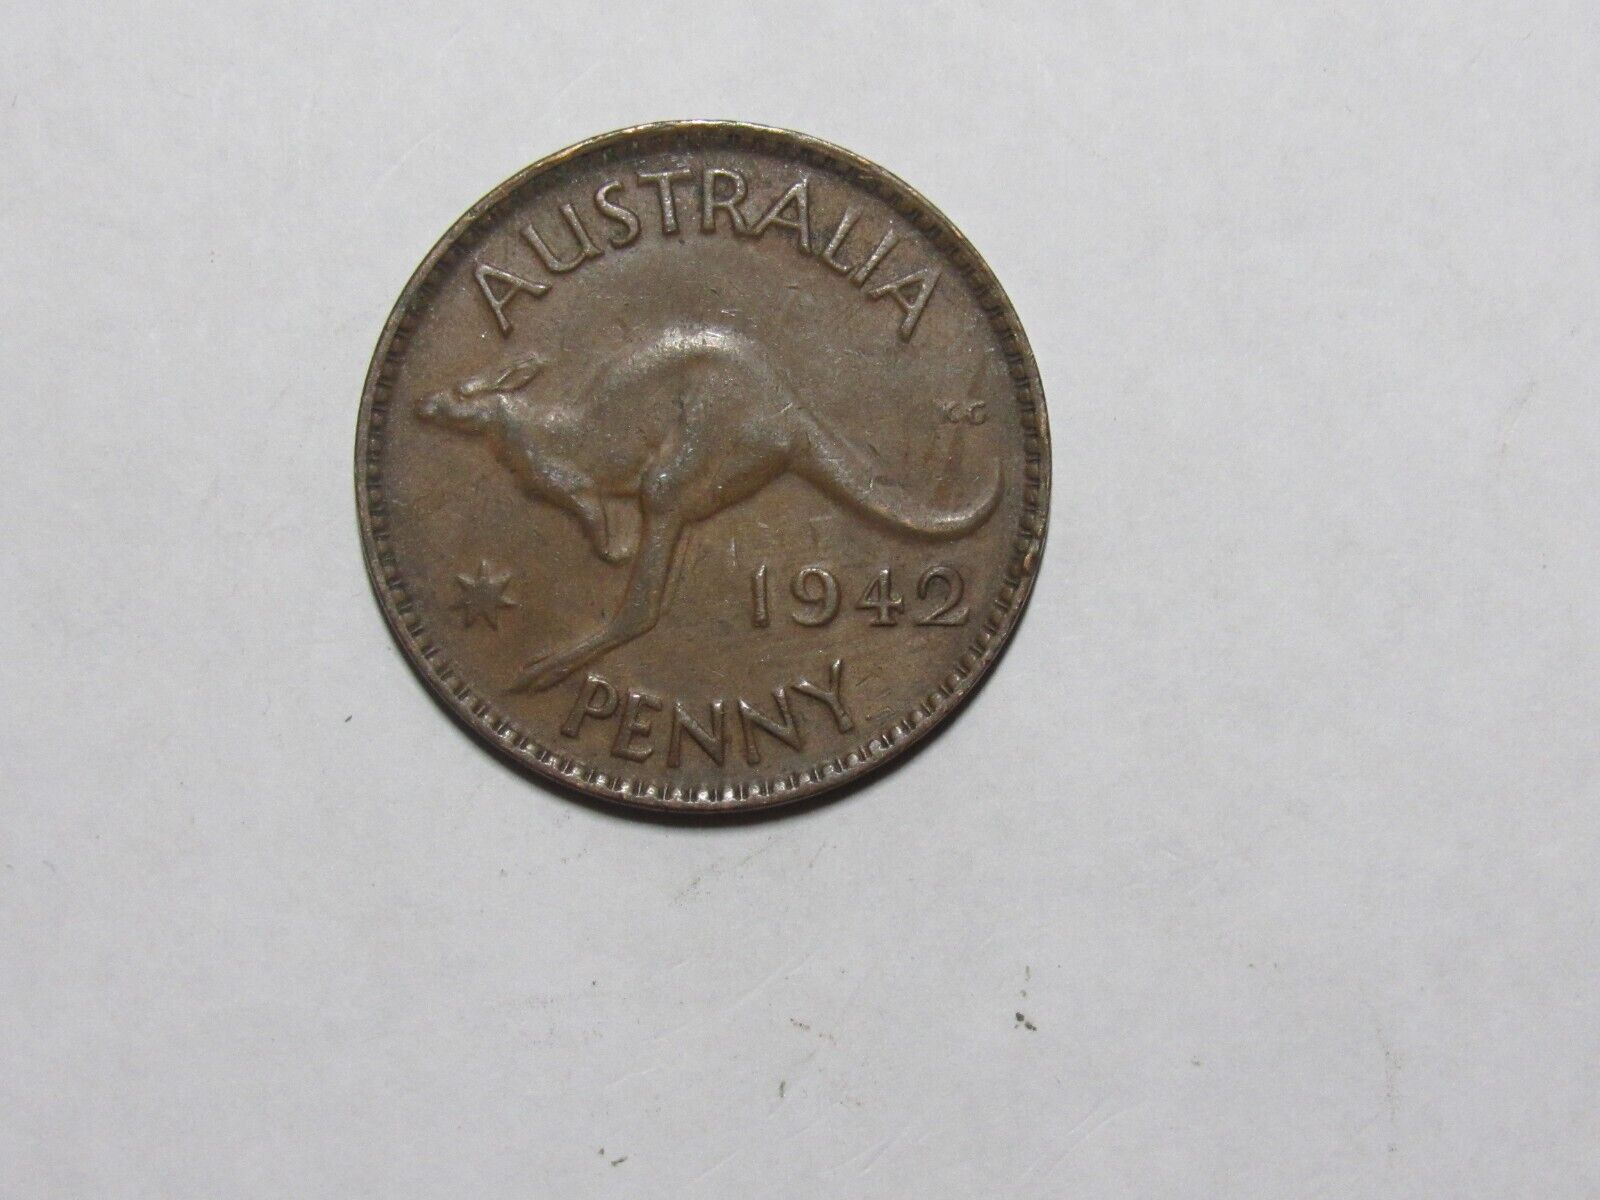 Old Australia Coin - 1942 (p) Penny Kangaroo - Circulated